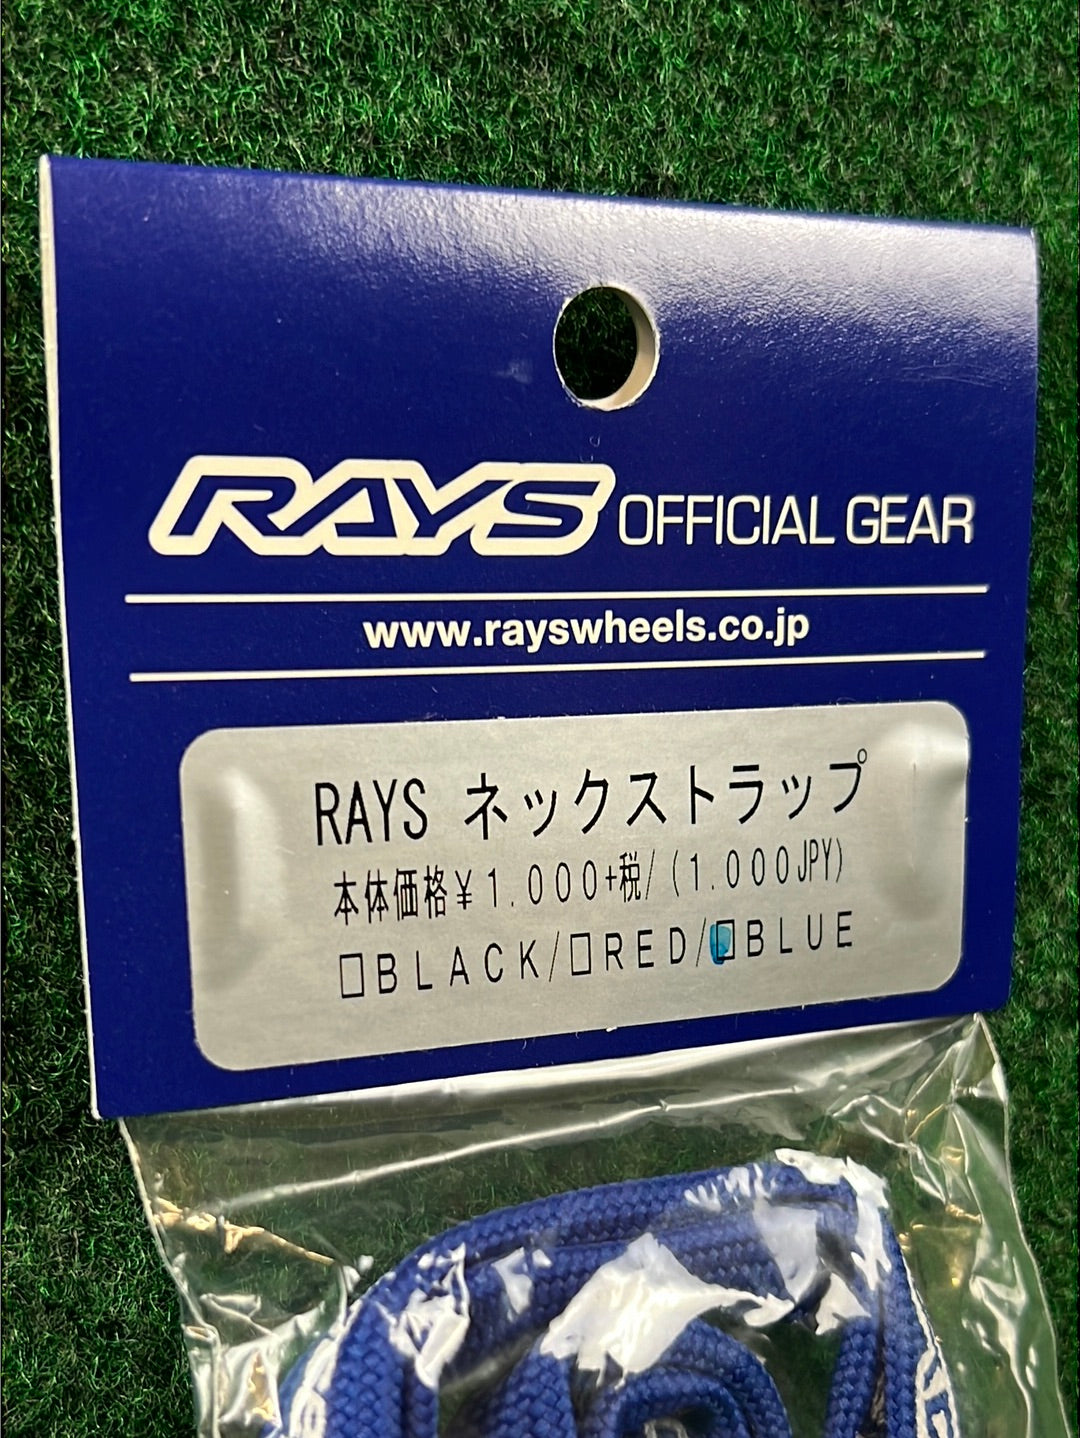 RAYS Wheels - Official Gear F1 Lanyard Keychain (BLUE)